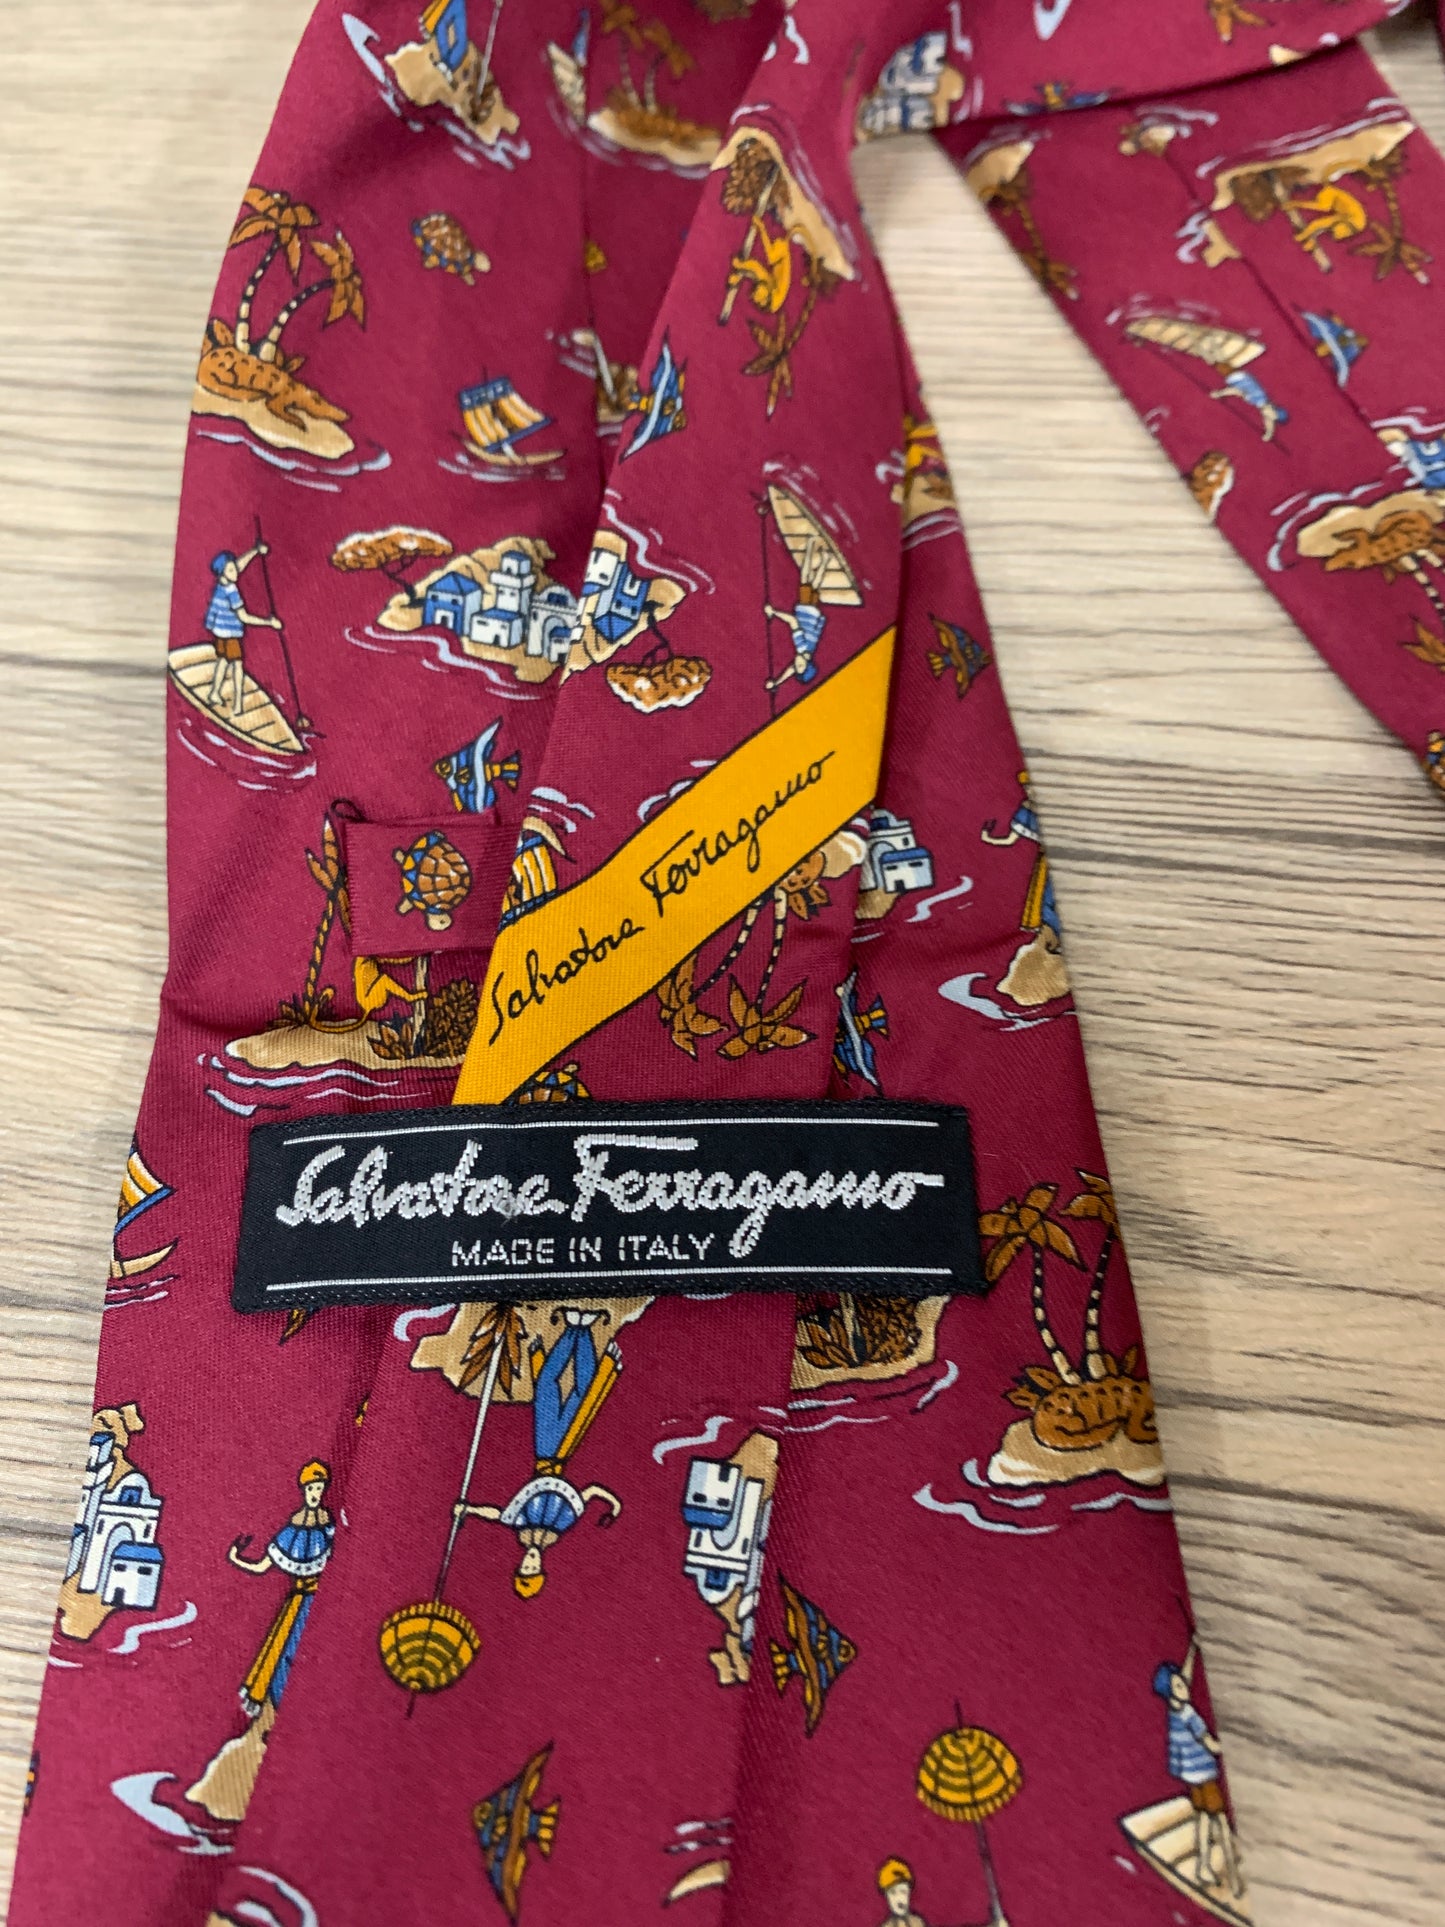 Salvatore Ferragamo Dark red tie made in italy